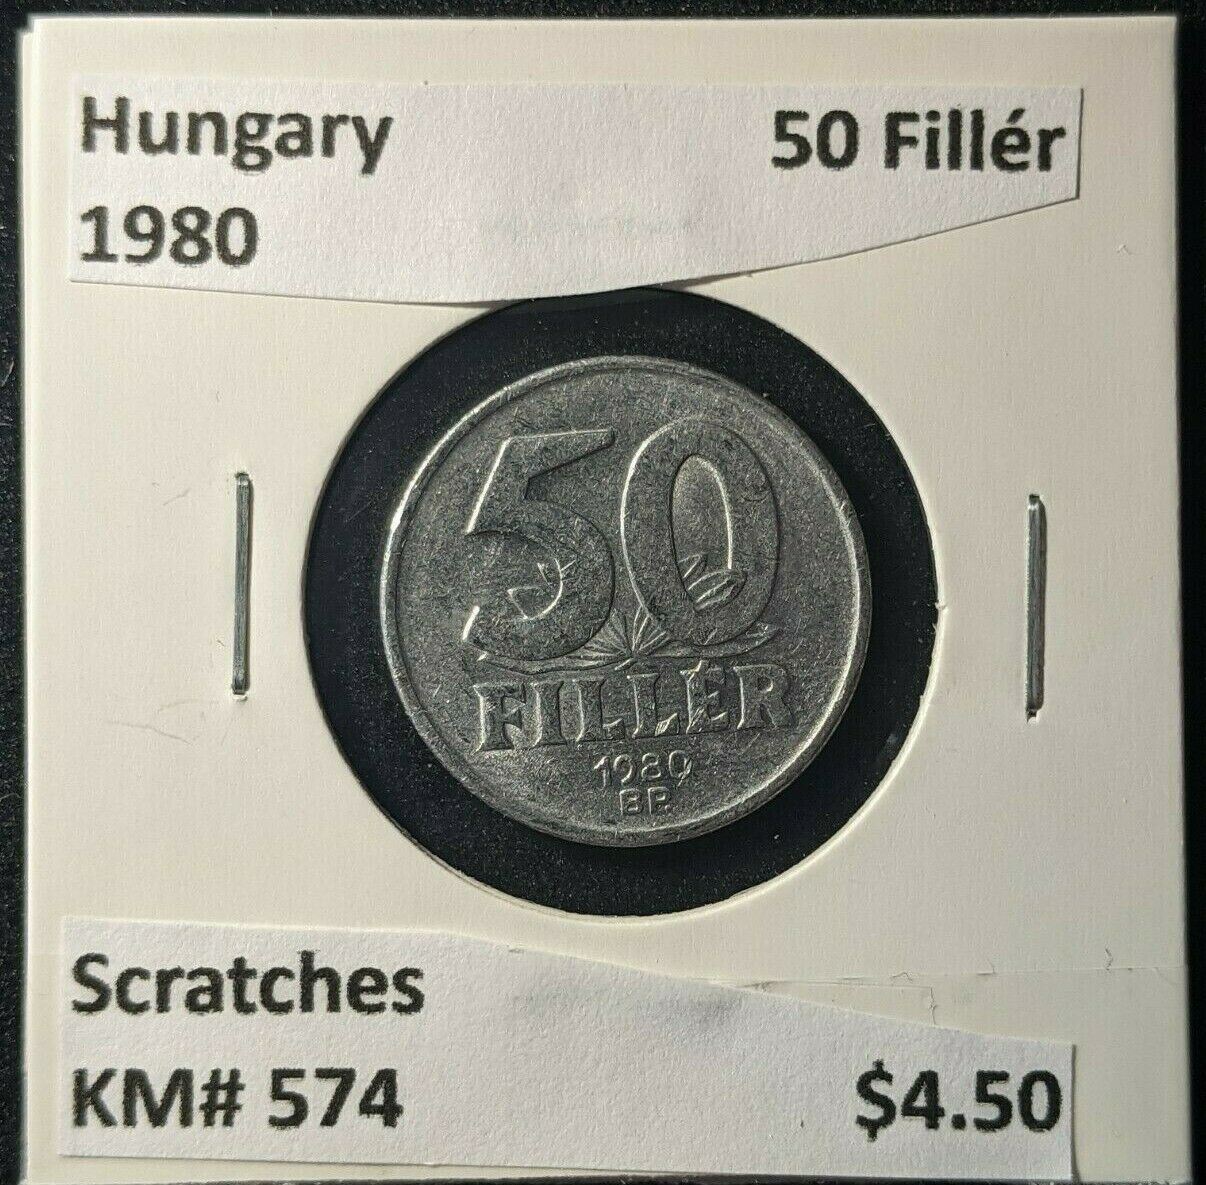 Hungary 1980 50 FillÃ©r KM# 574 Scratches #357